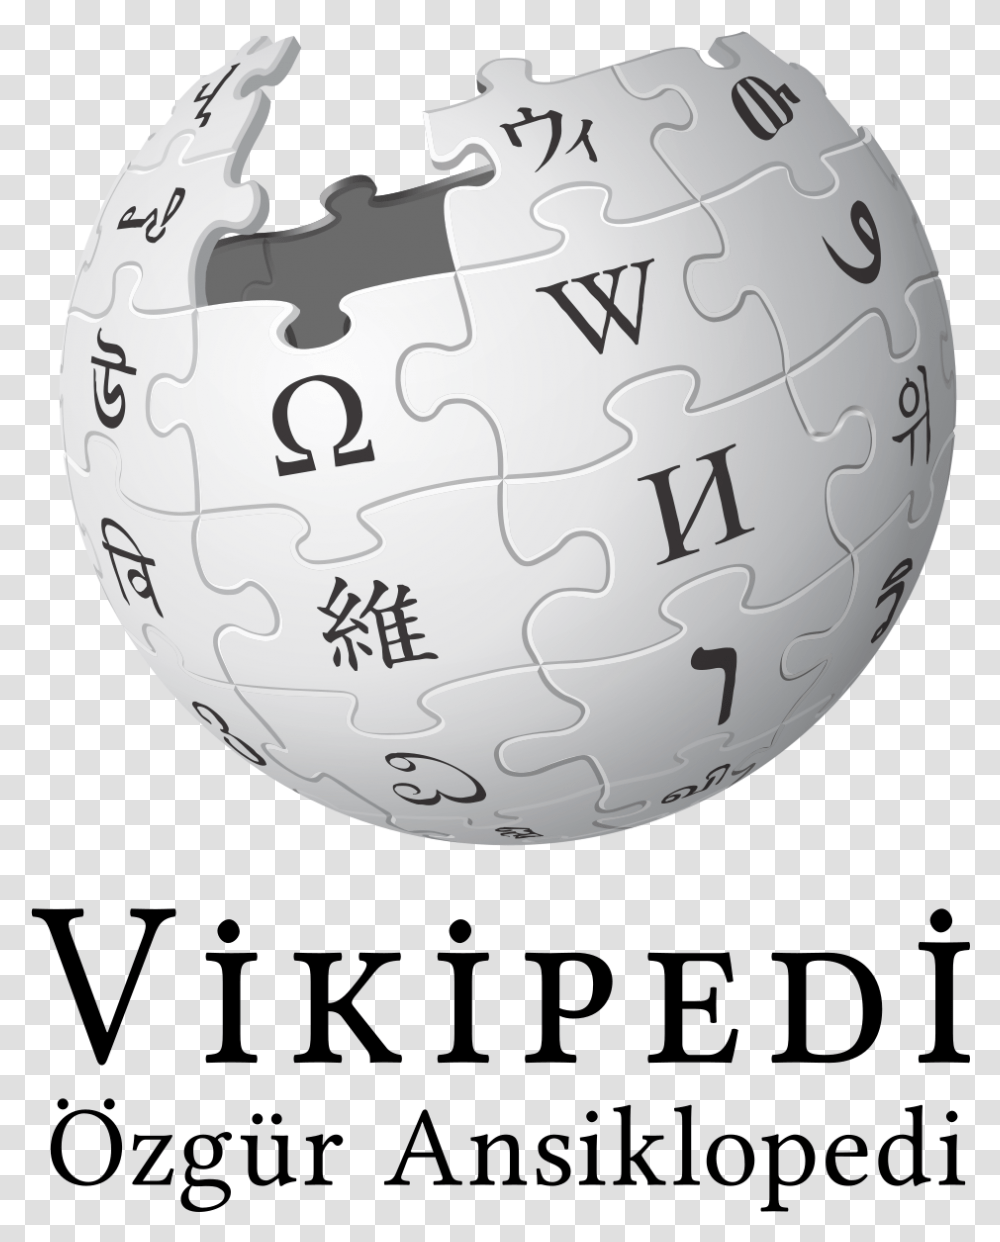 Turkish Wikipedia Wikipedia Wikipedia, Sphere, Text, Ball, Smile Transparent Png